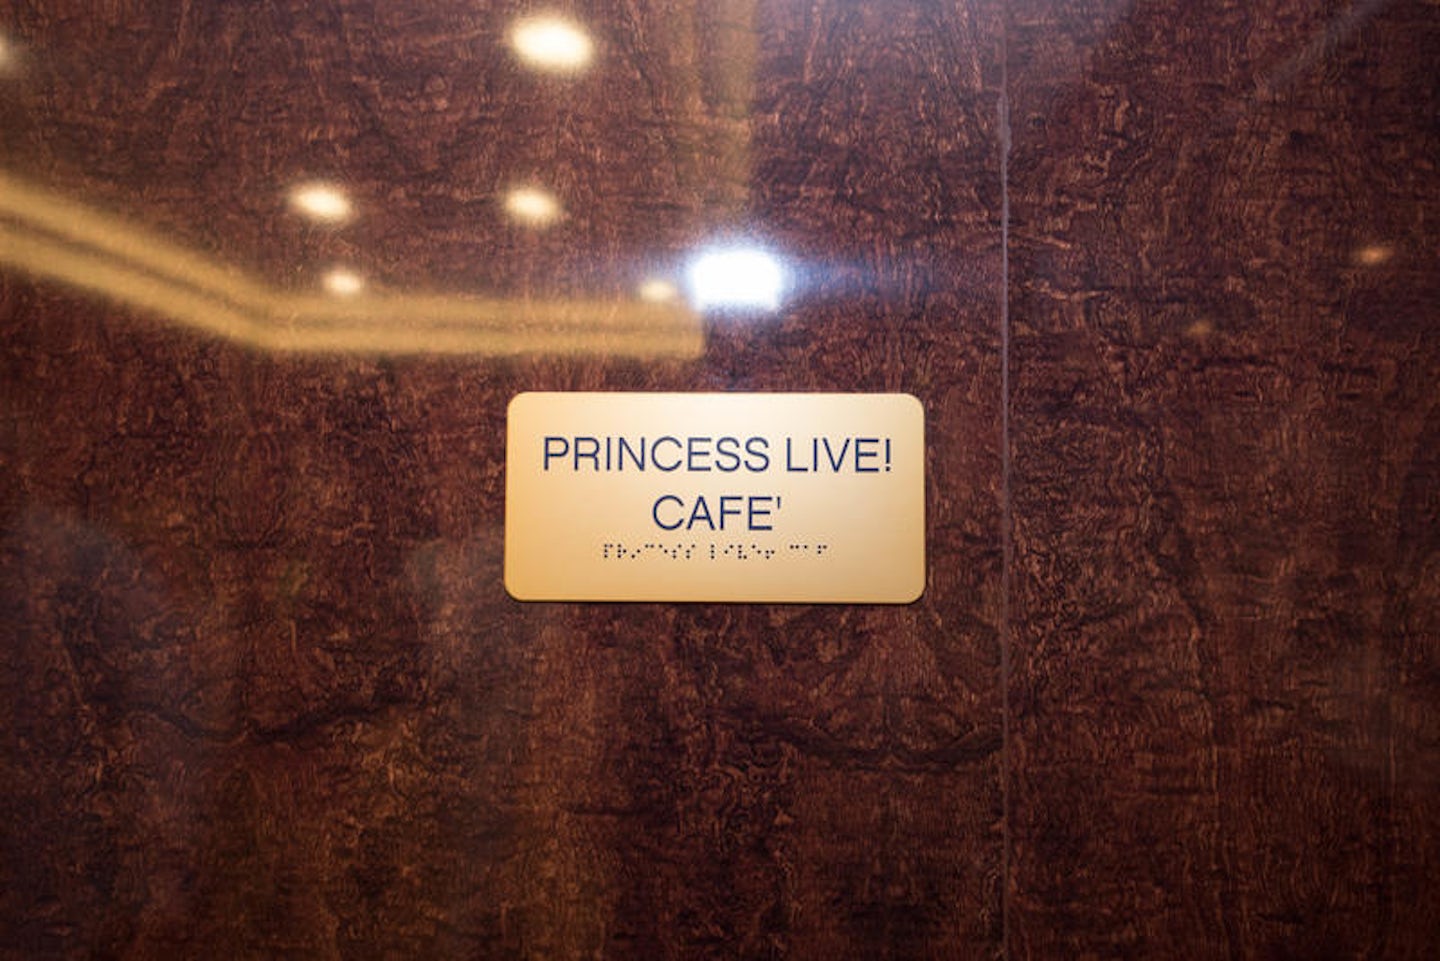 Princess Live! Cafe on Regal Princess